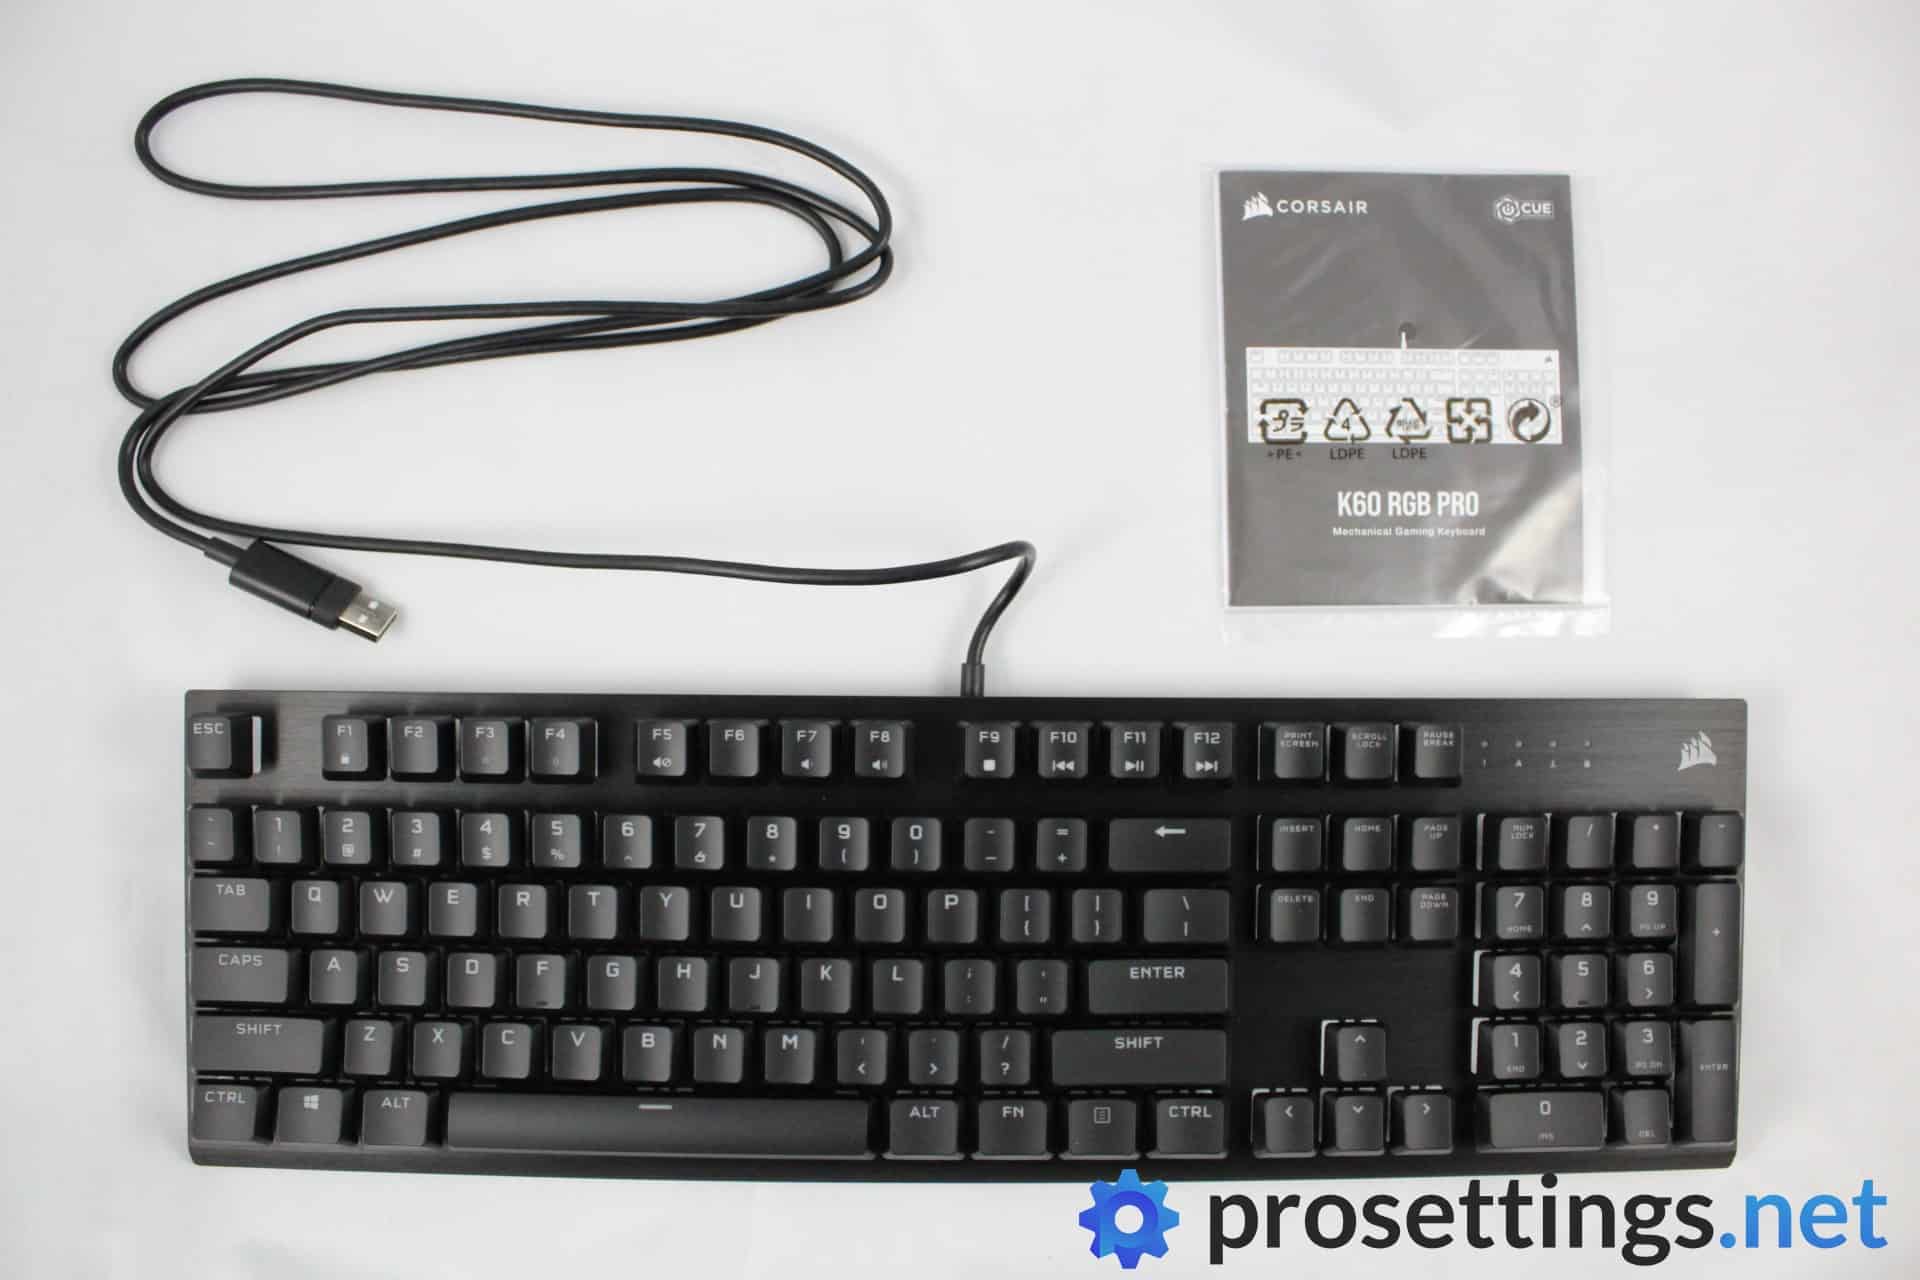 Corsair K60 RGB Pro Review Packaging